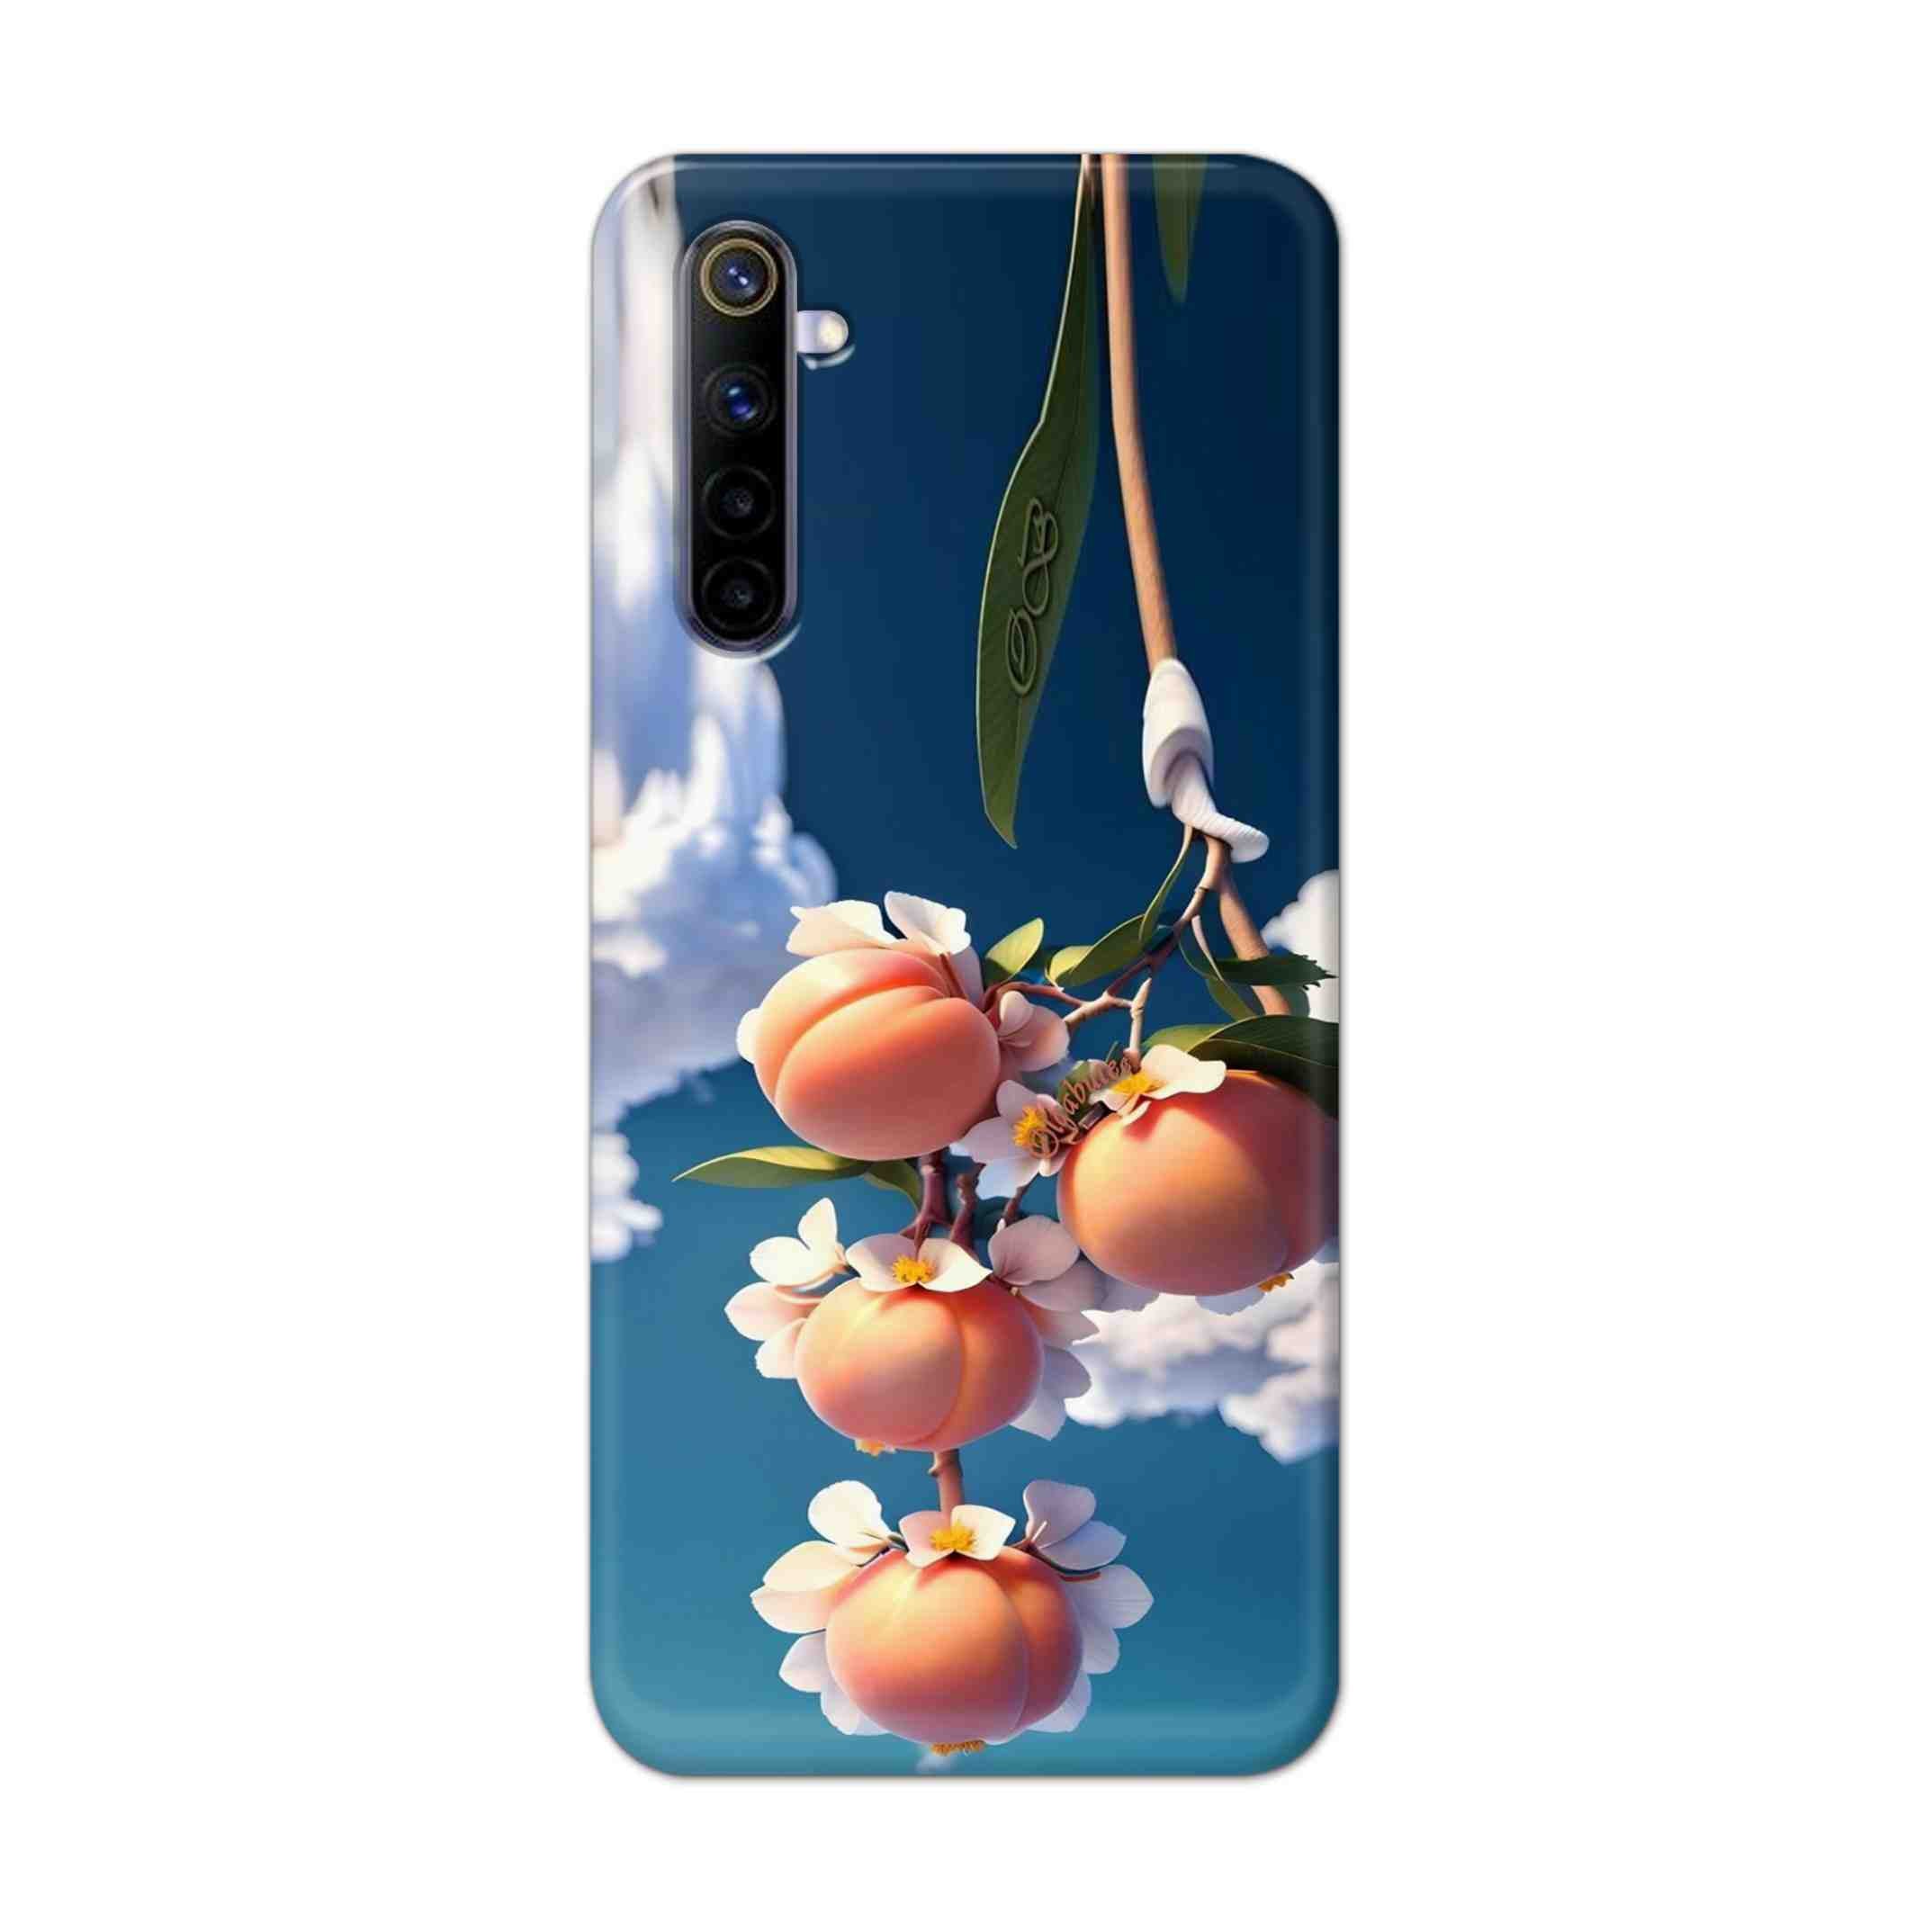 Buy Fruit Hard Back Mobile Phone Case Cover For REALME 6 PRO Online